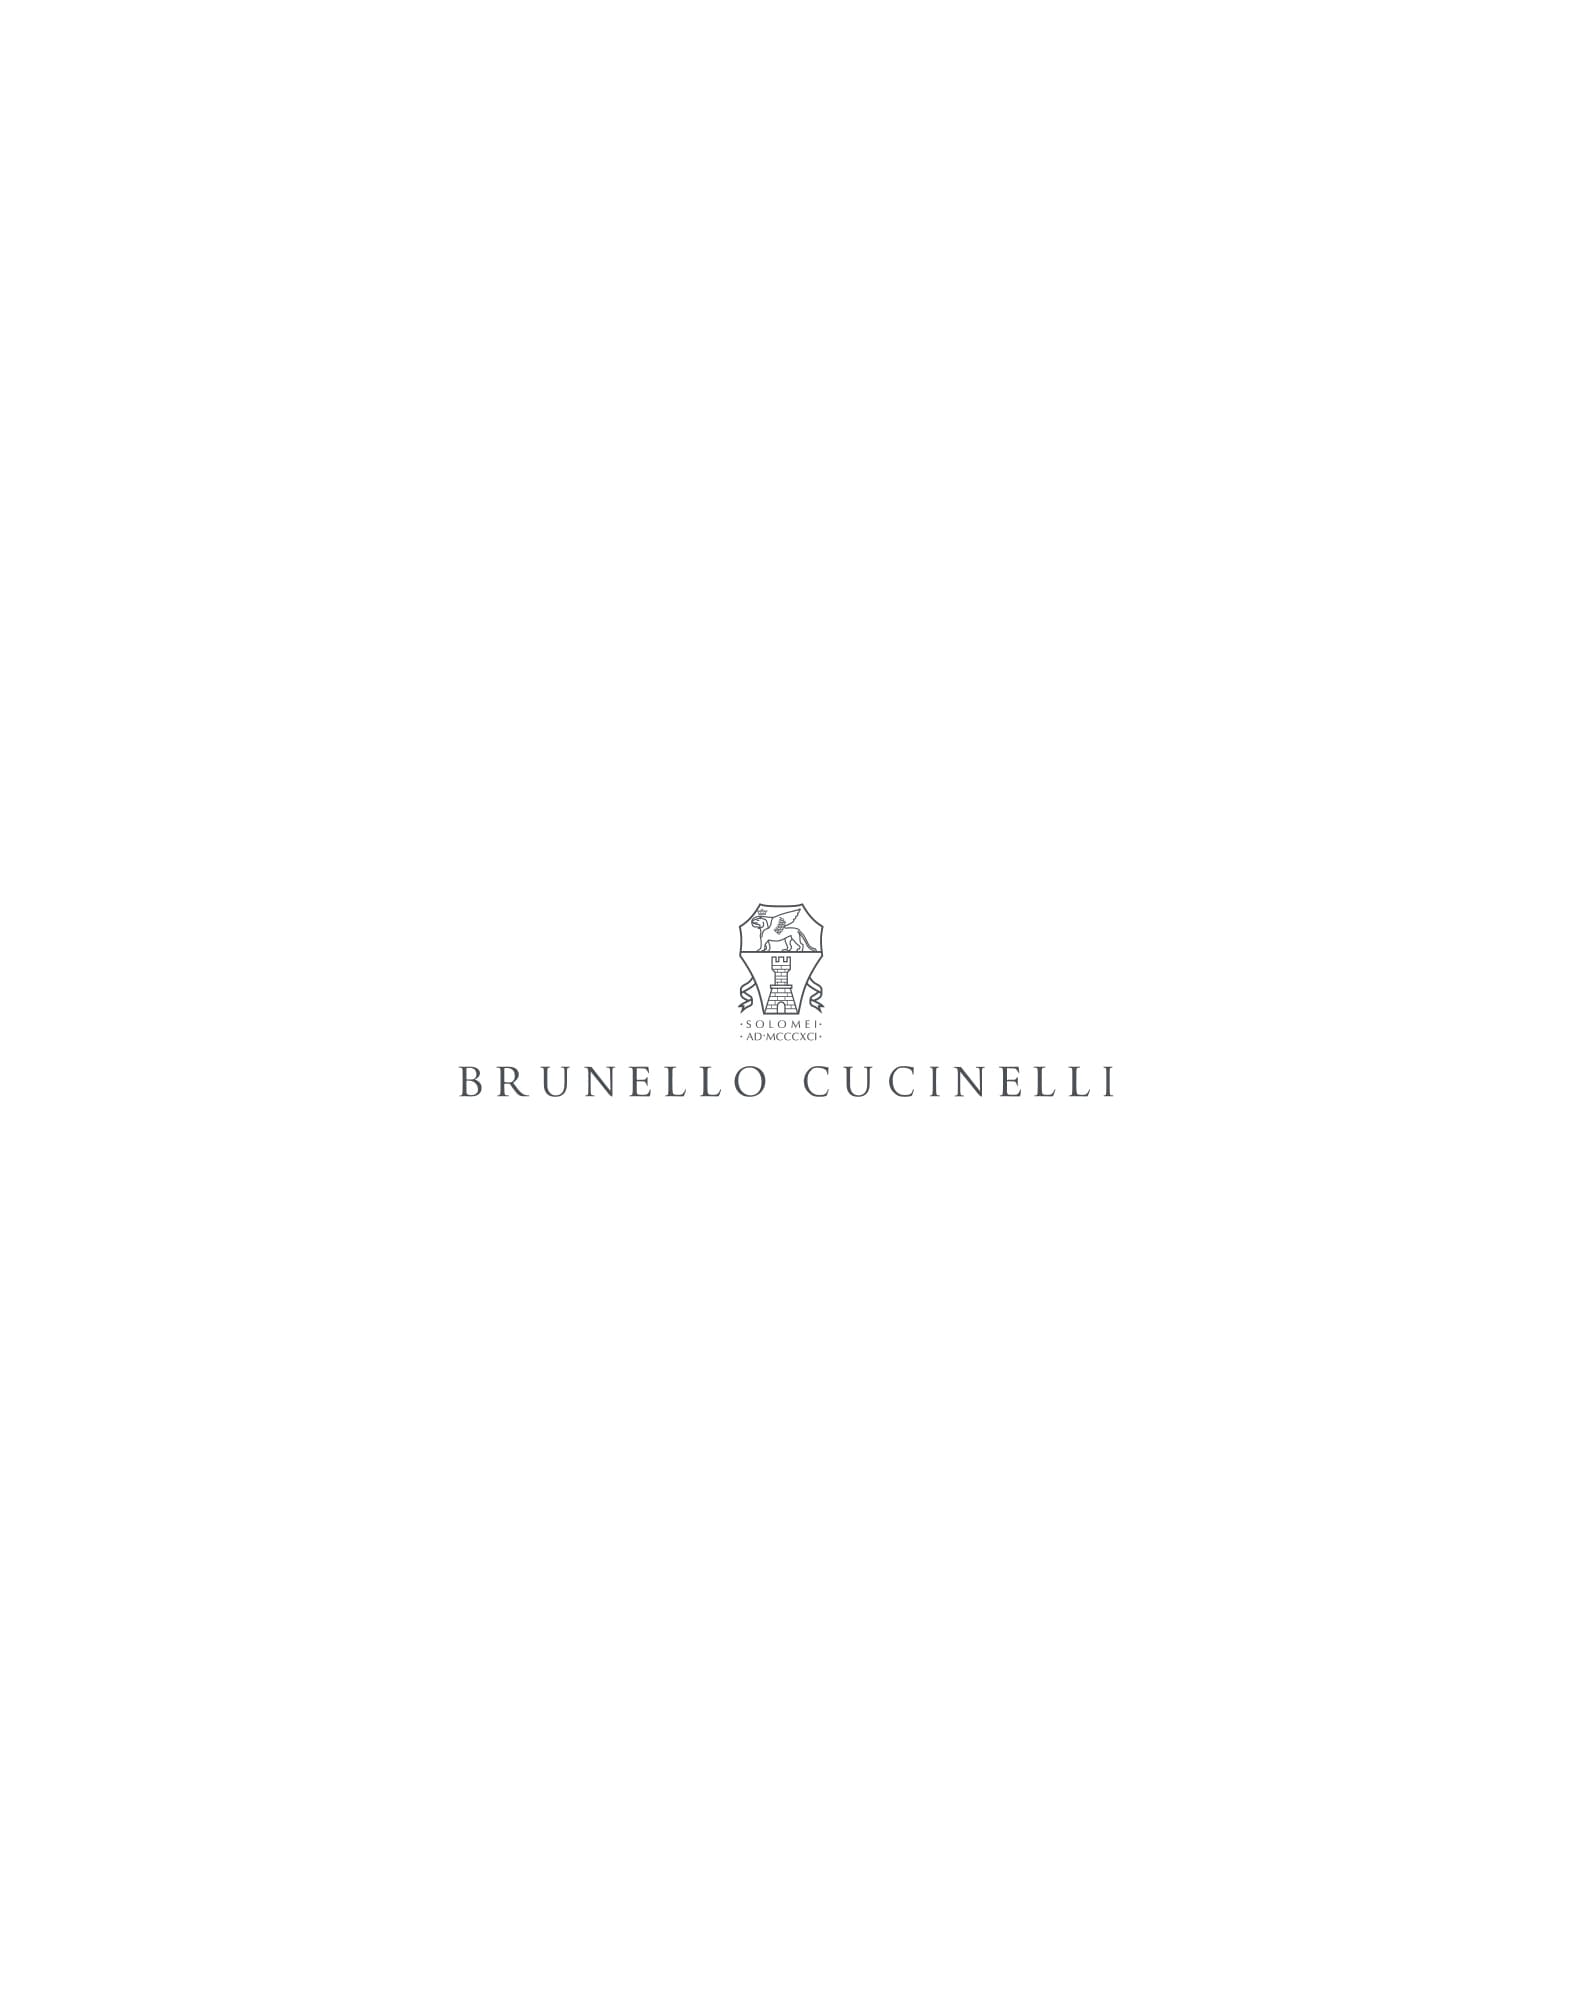 Pull Jacquard Gris Homme -
                        Brunello Cucinelli
                    